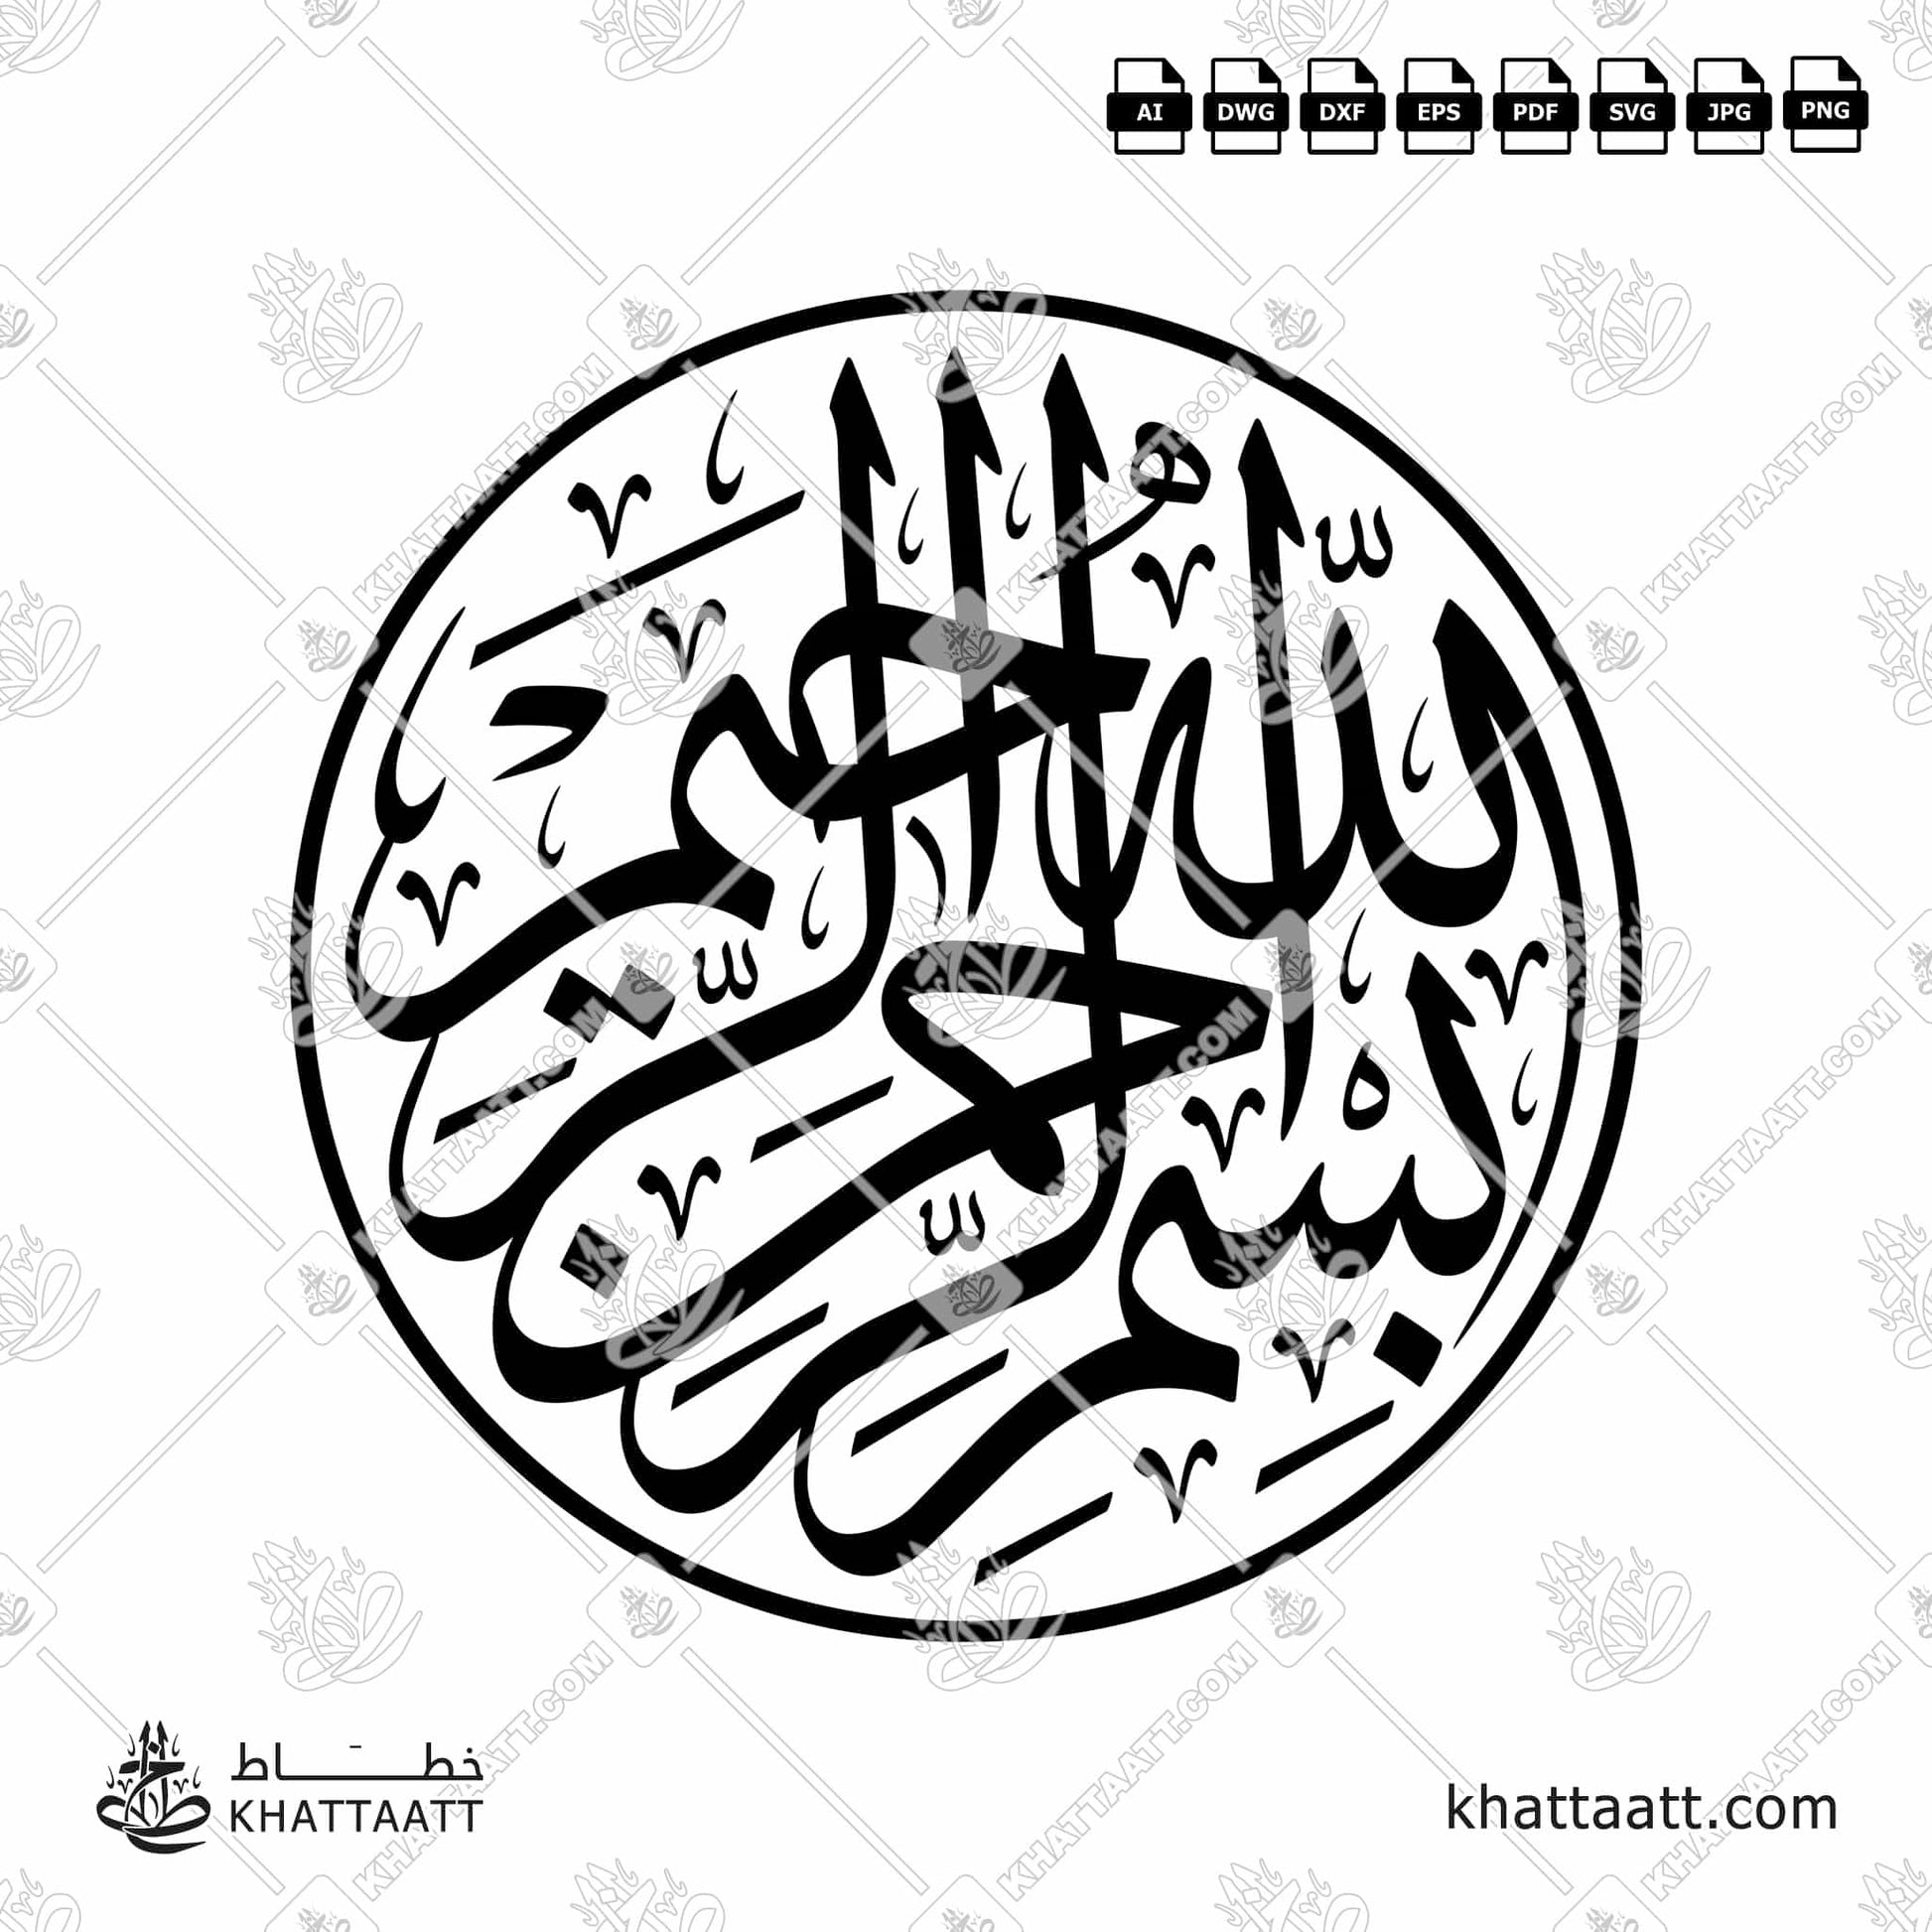 Download Arabic Calligraphy of بسم الله الرحمن الرحيم in Thuluth - خط الثلث in vector .ai .eps .dwg .dxf .pdf .svg .jpg .png